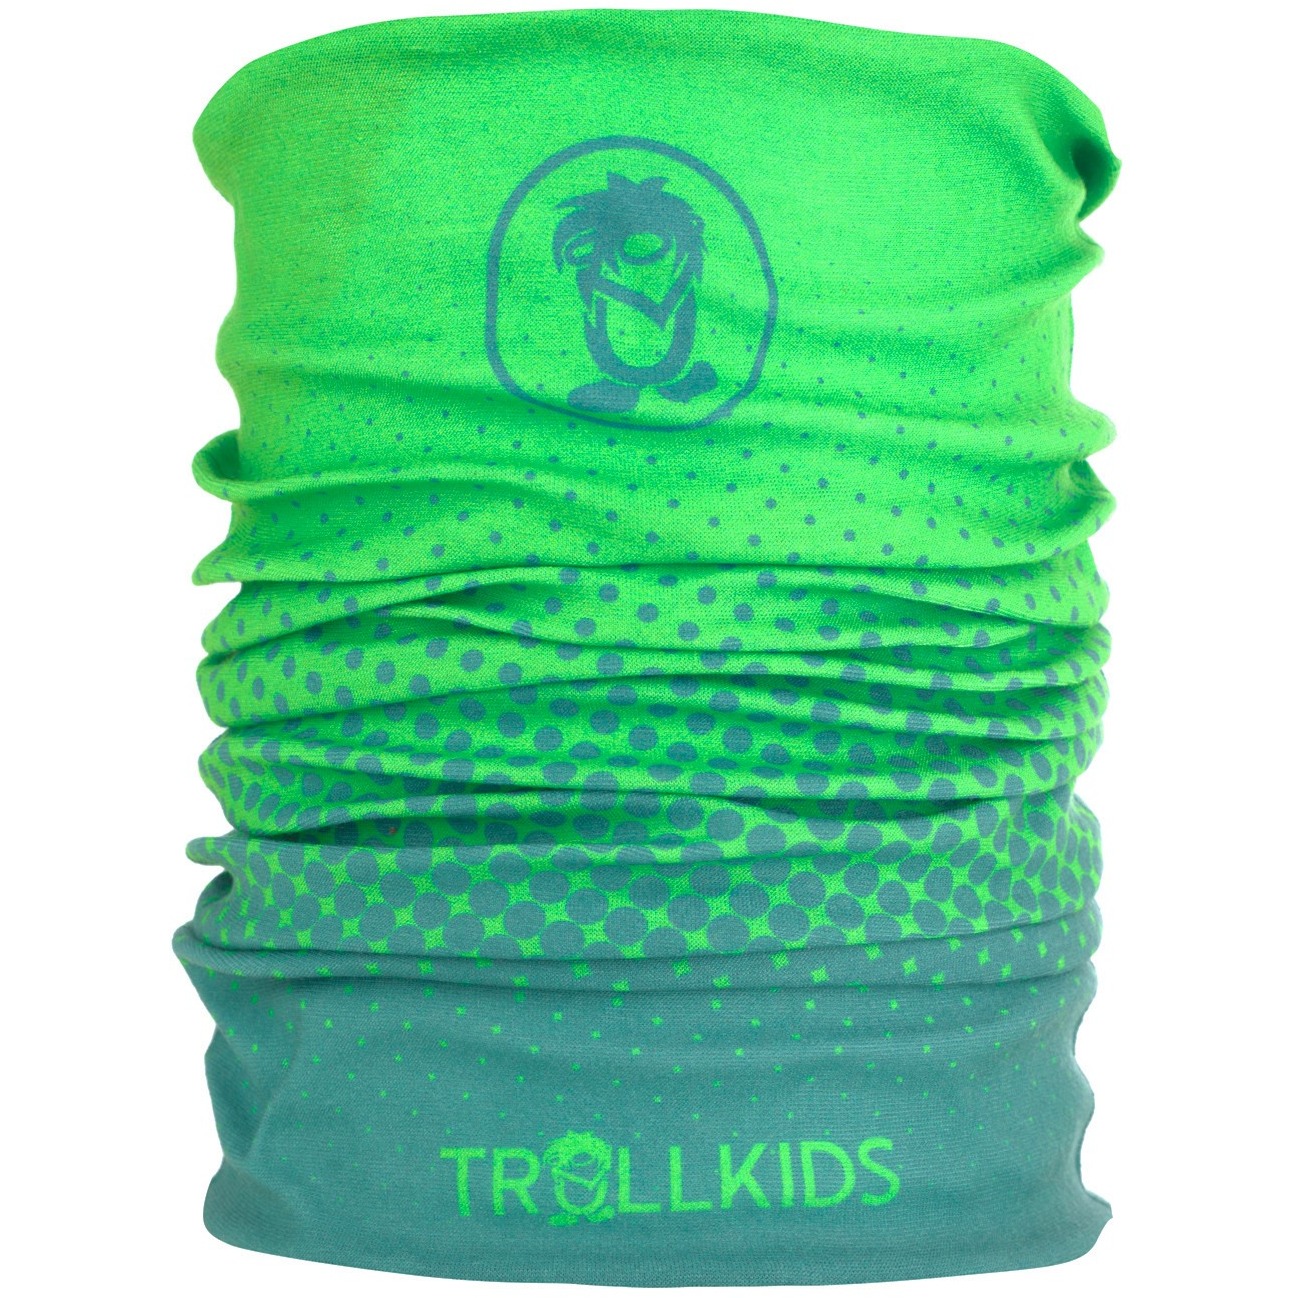 Productfoto van Trollkids Pointilism Kinder Multifunctionele Doek - Dark Green/Light Green